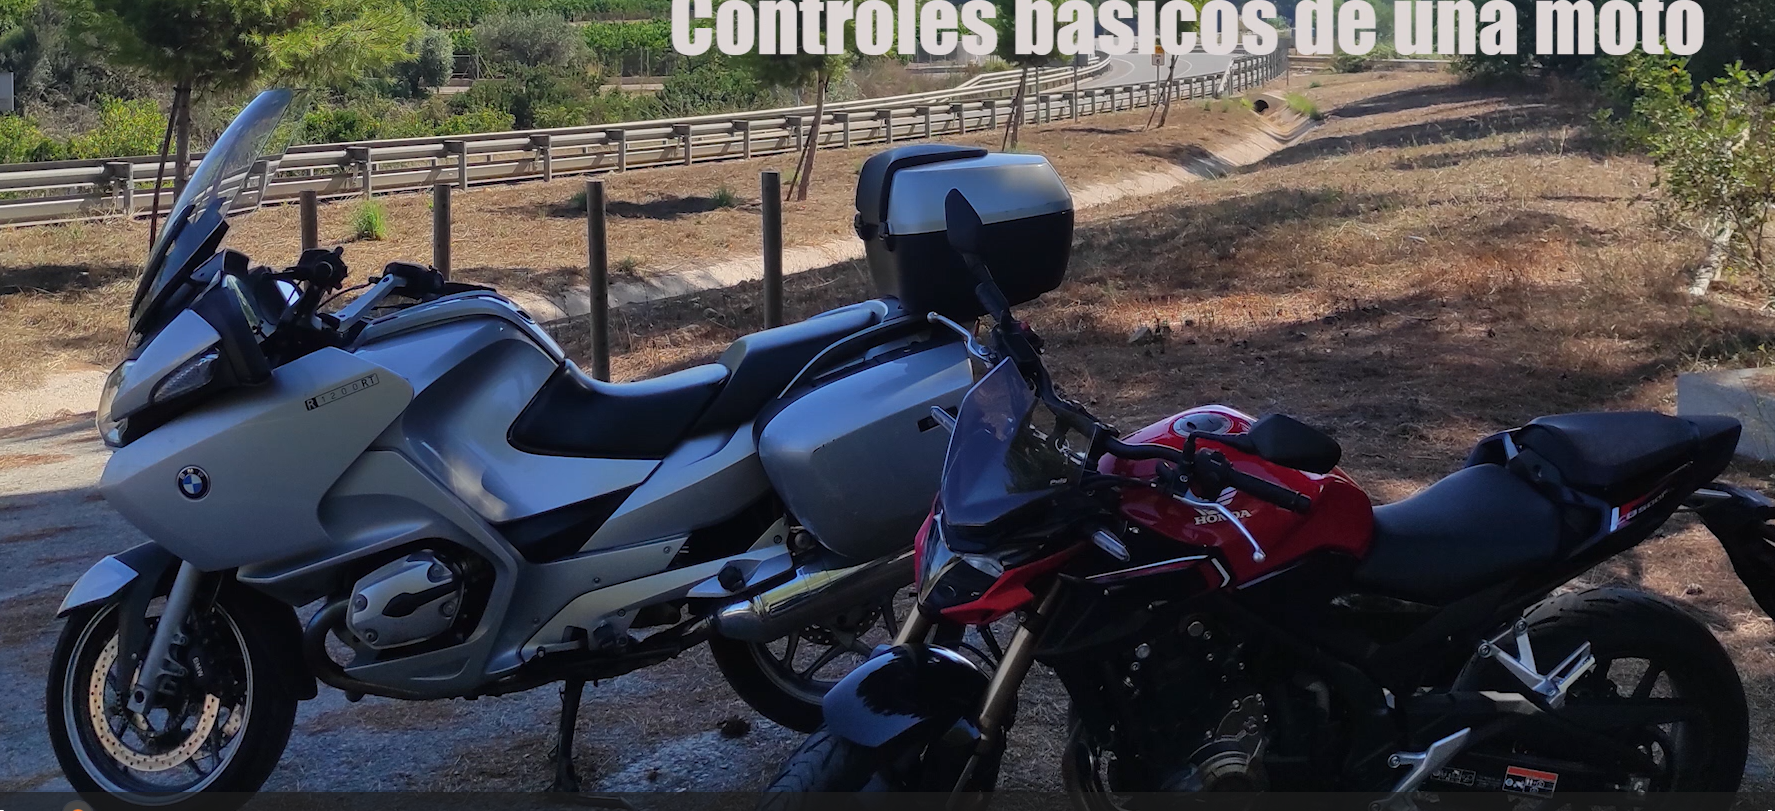 Controles básicos moto